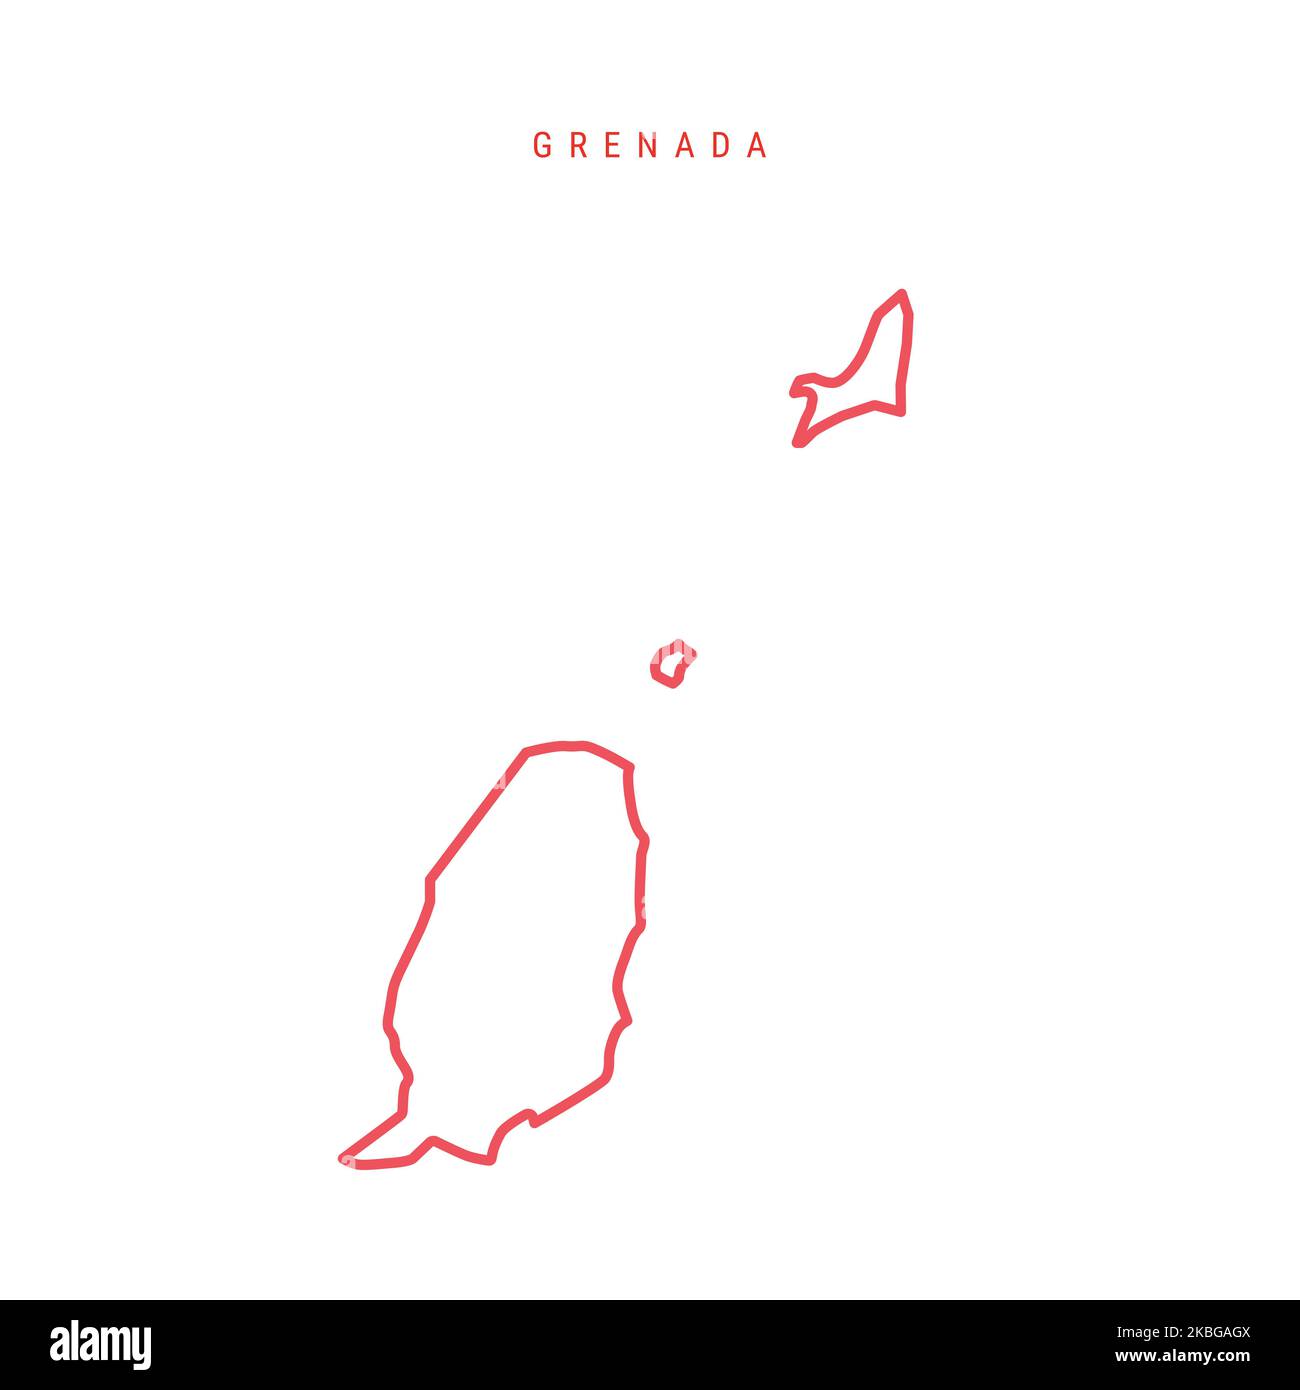 Grenada outline map. Grenadian red border. Country name. illustration. Stock Photo